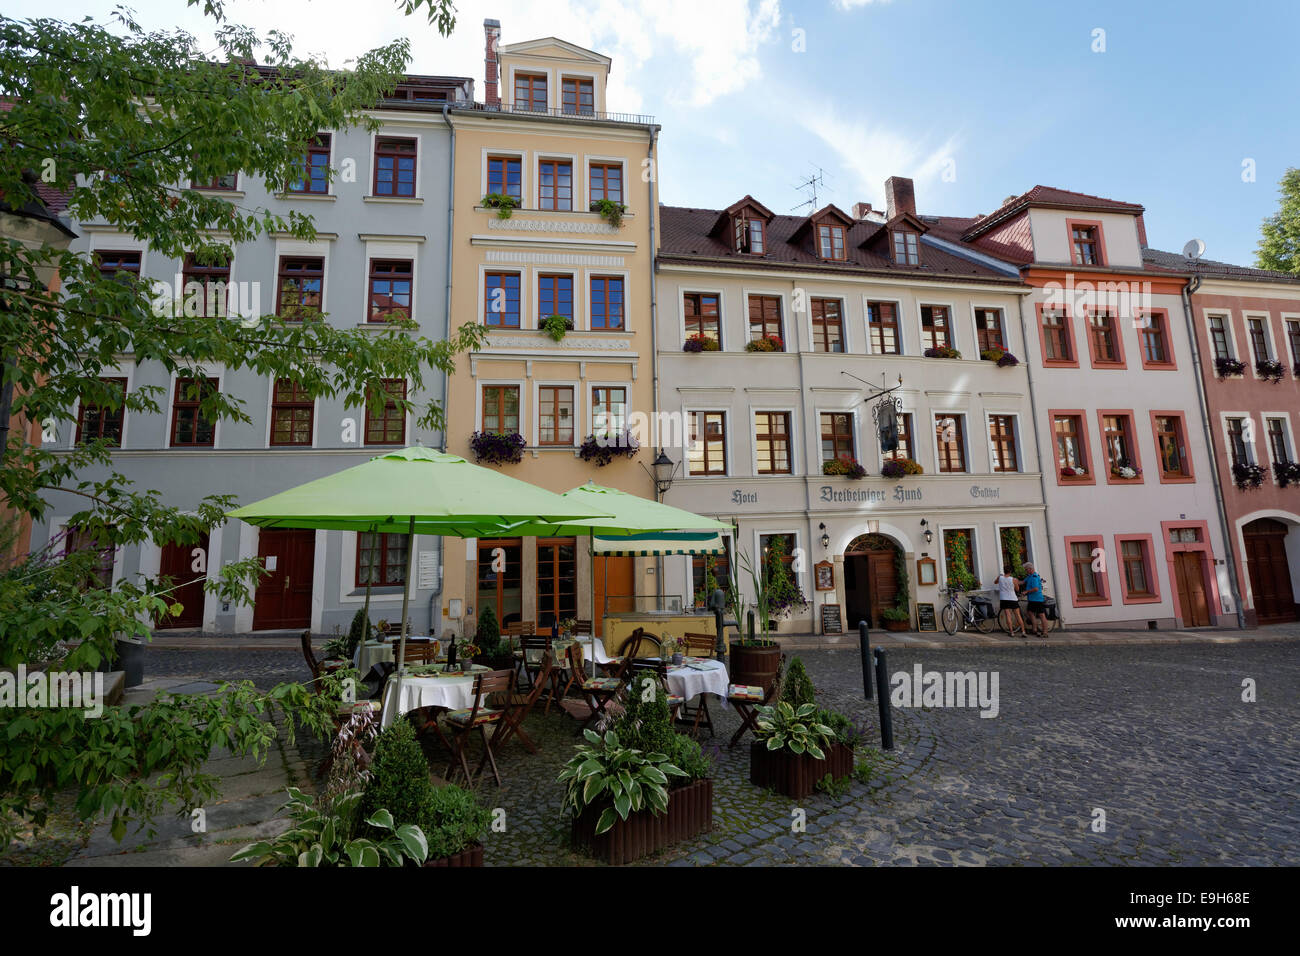 Restaurant in the historic town centre, Görlitz, Saxony, Germany Stock Photo